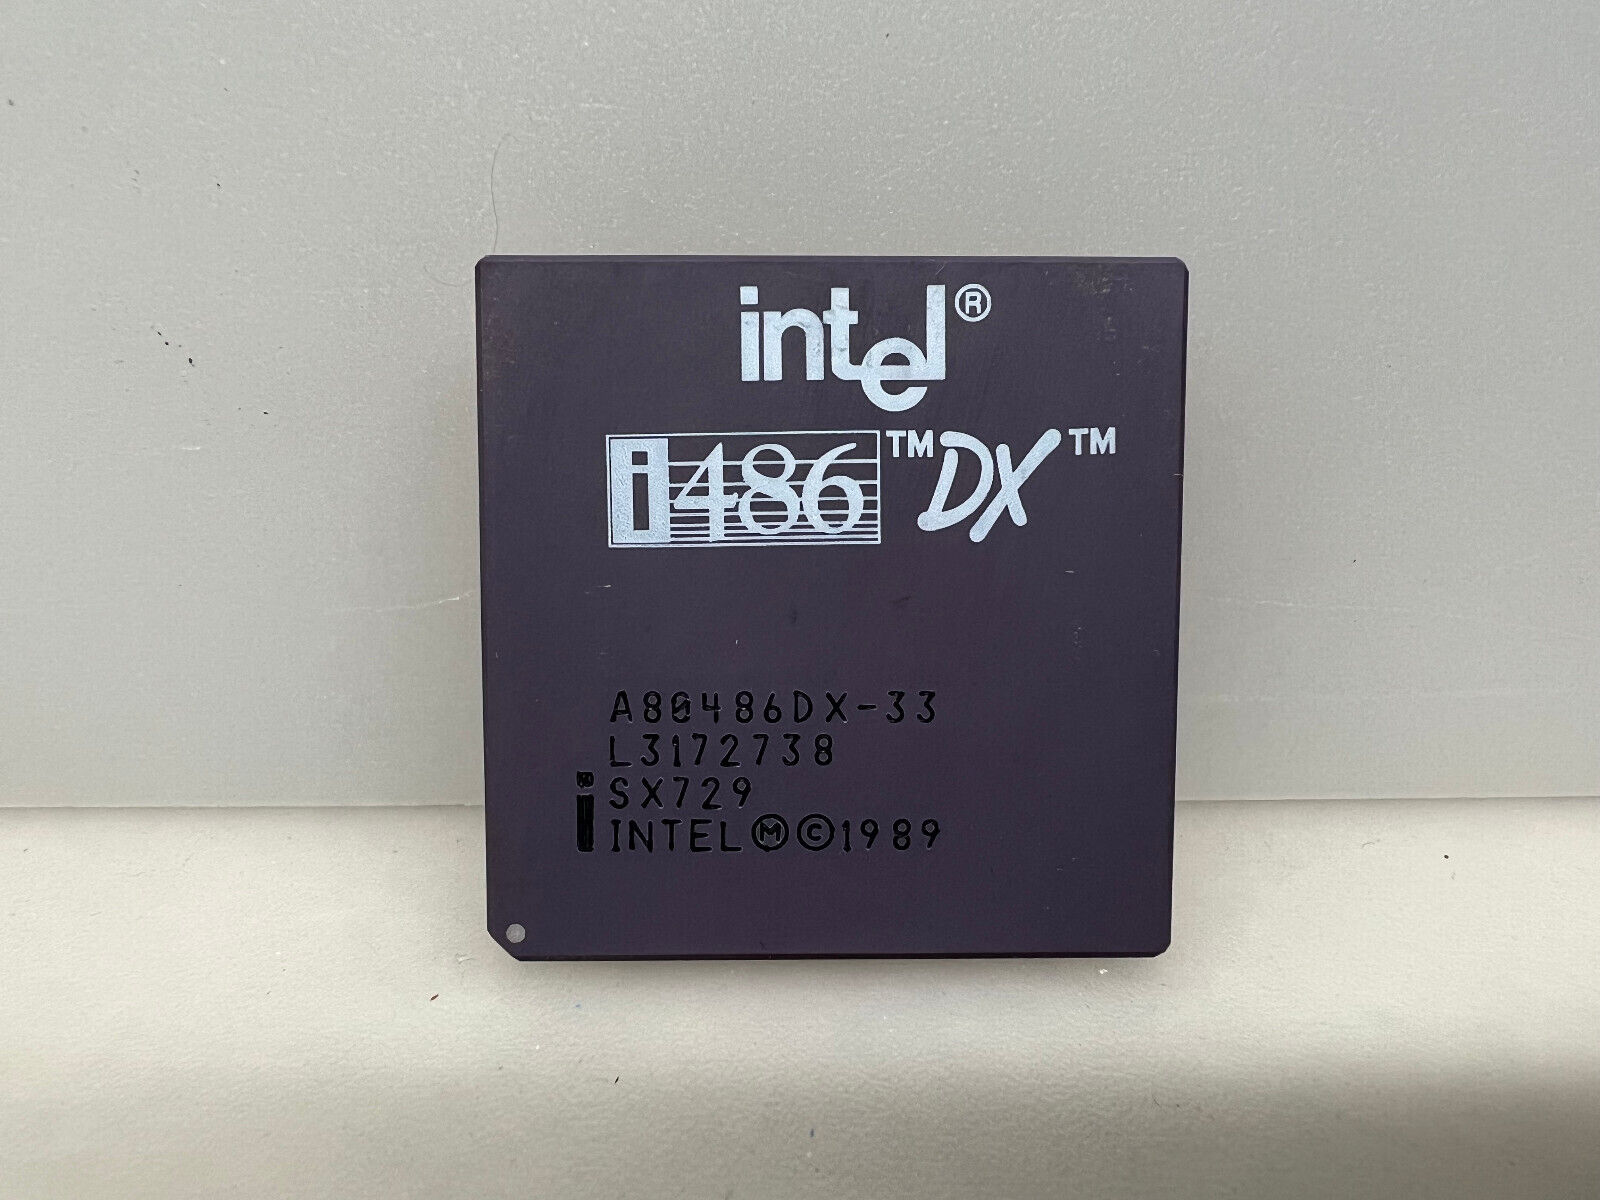 Intel i486DX 33 CPU 